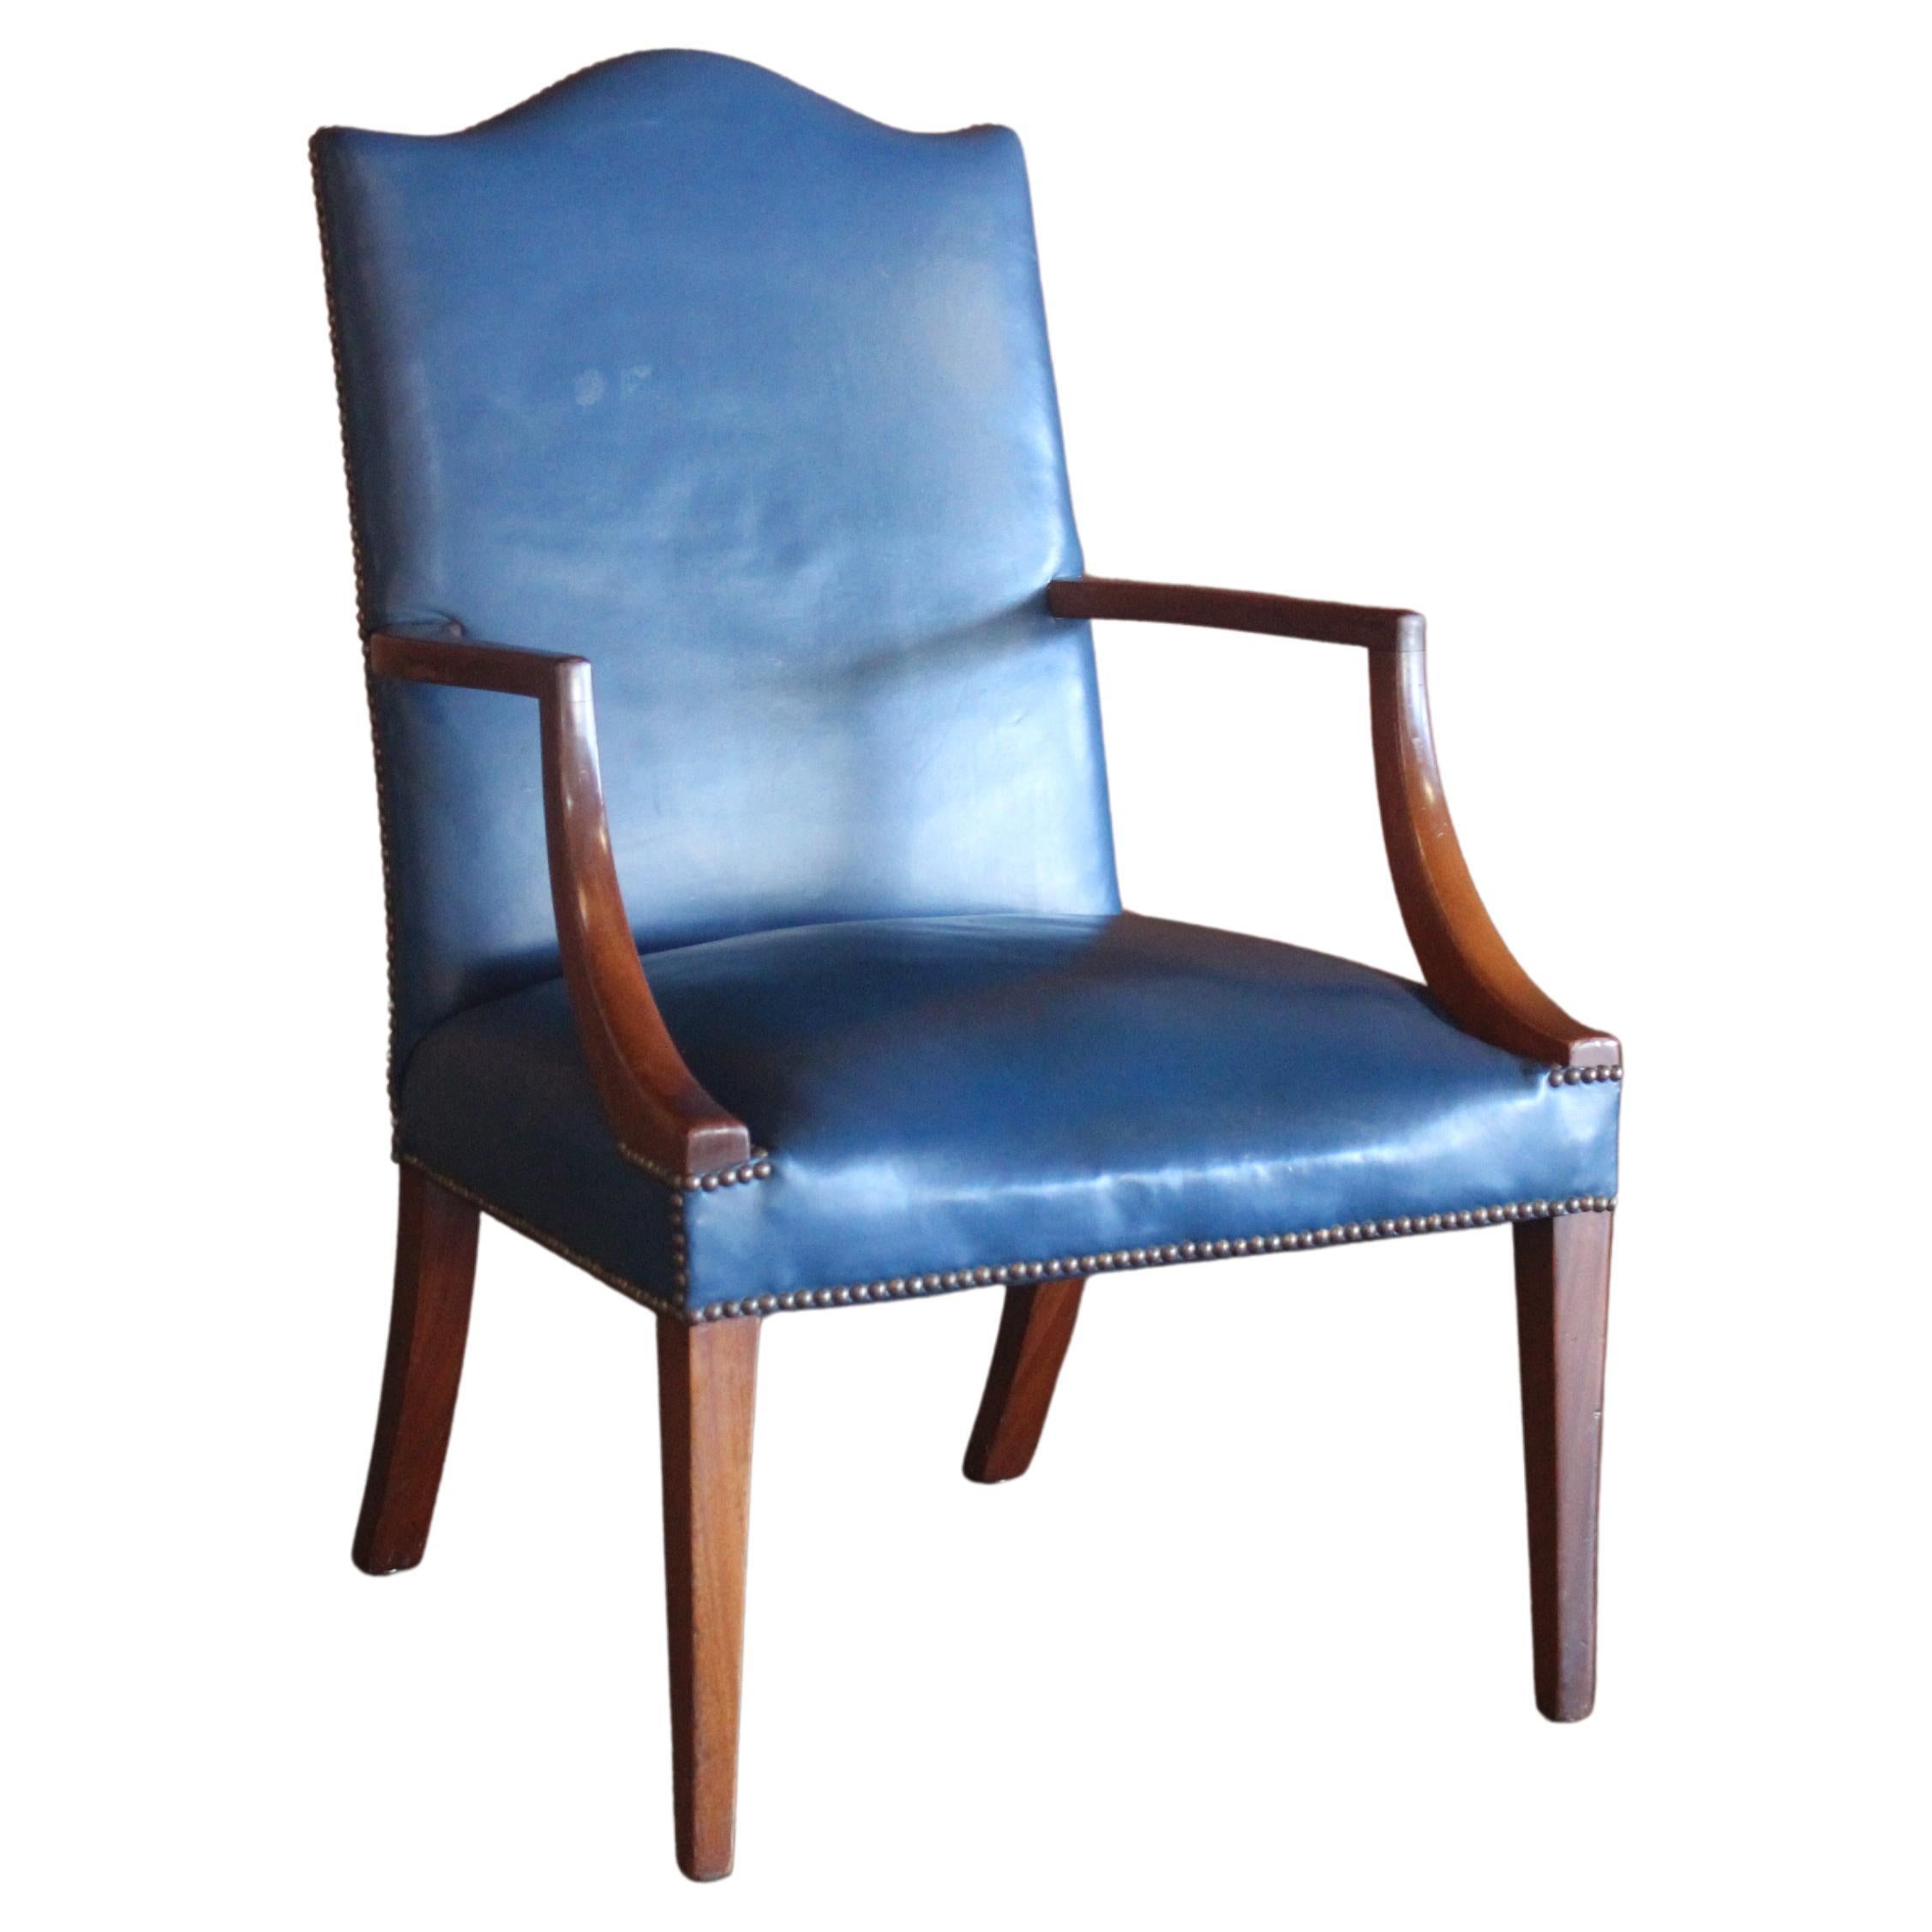 George II Stye English Mahogany Armchair in Original Blue Leather